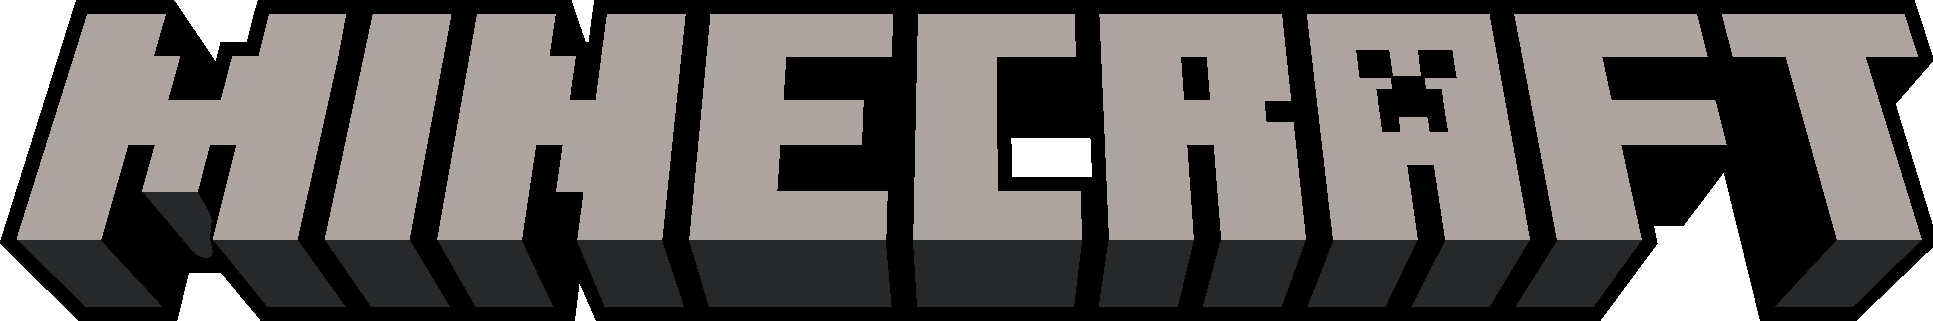 minecraft hardcore logo